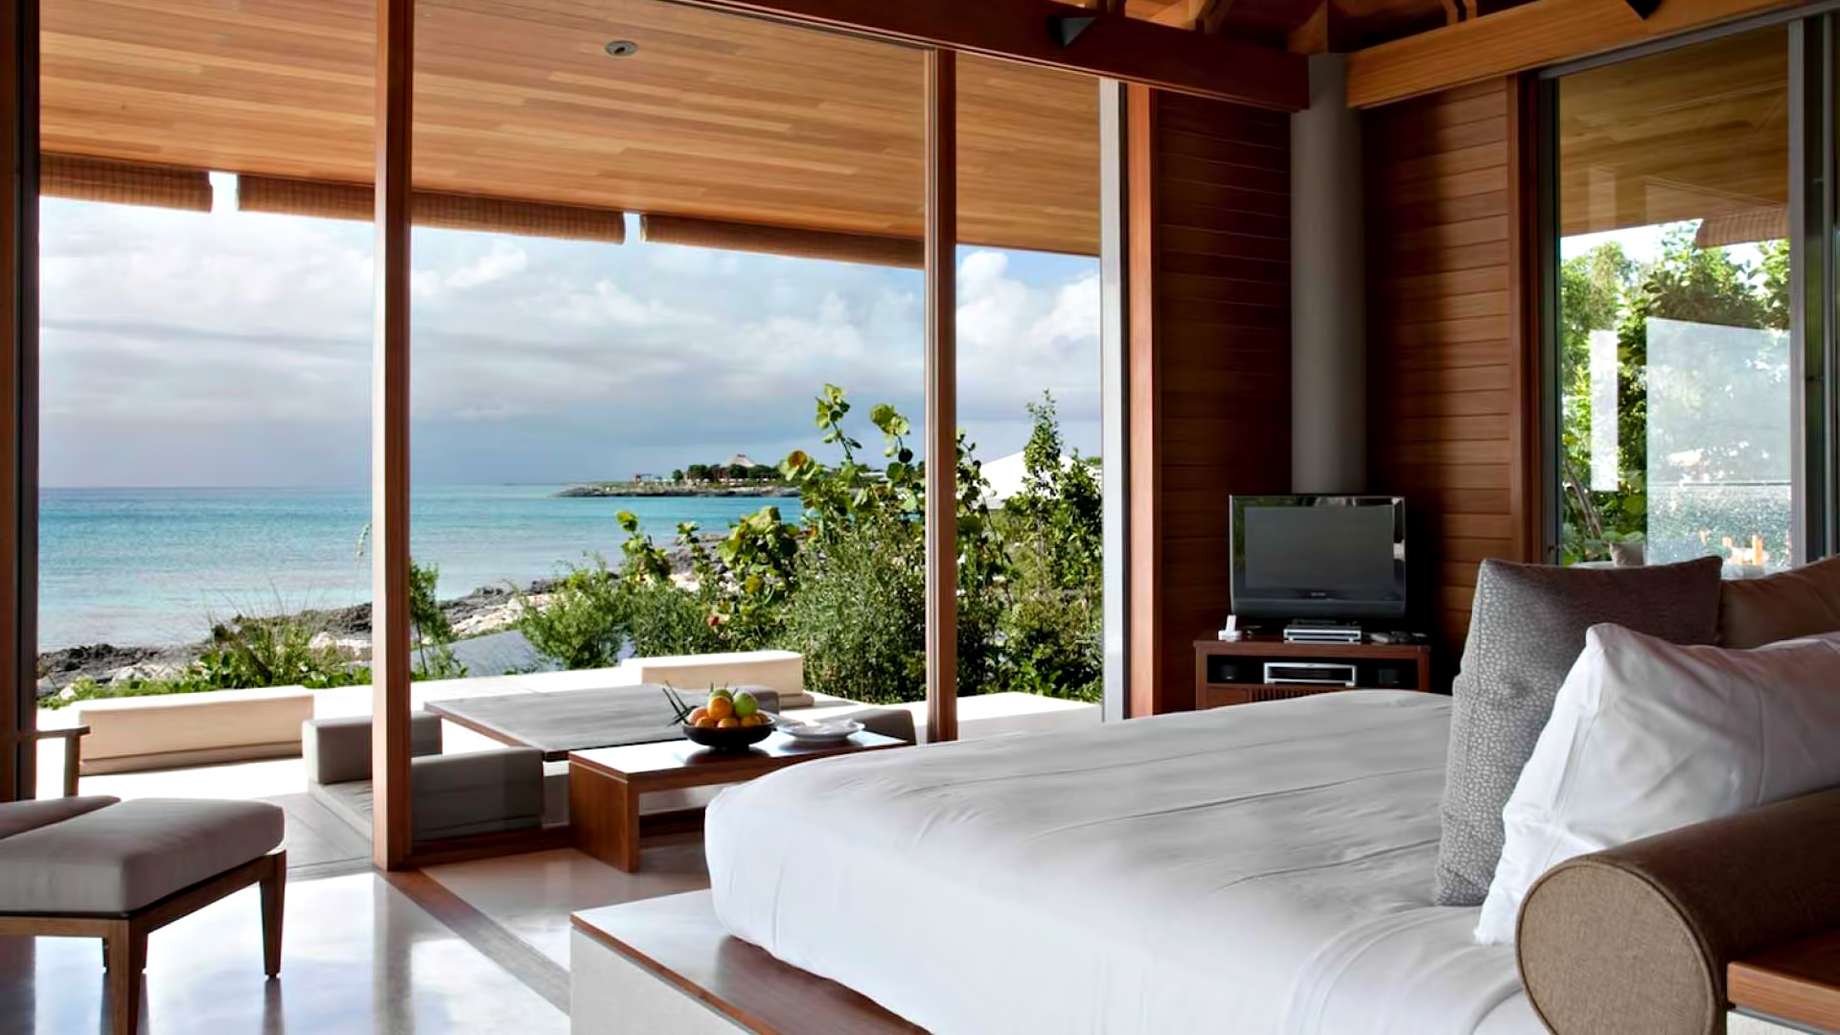 Amanyara Resort – Providenciales, Turks and Caicos Islands – Artist Ocean Villa Bedroom